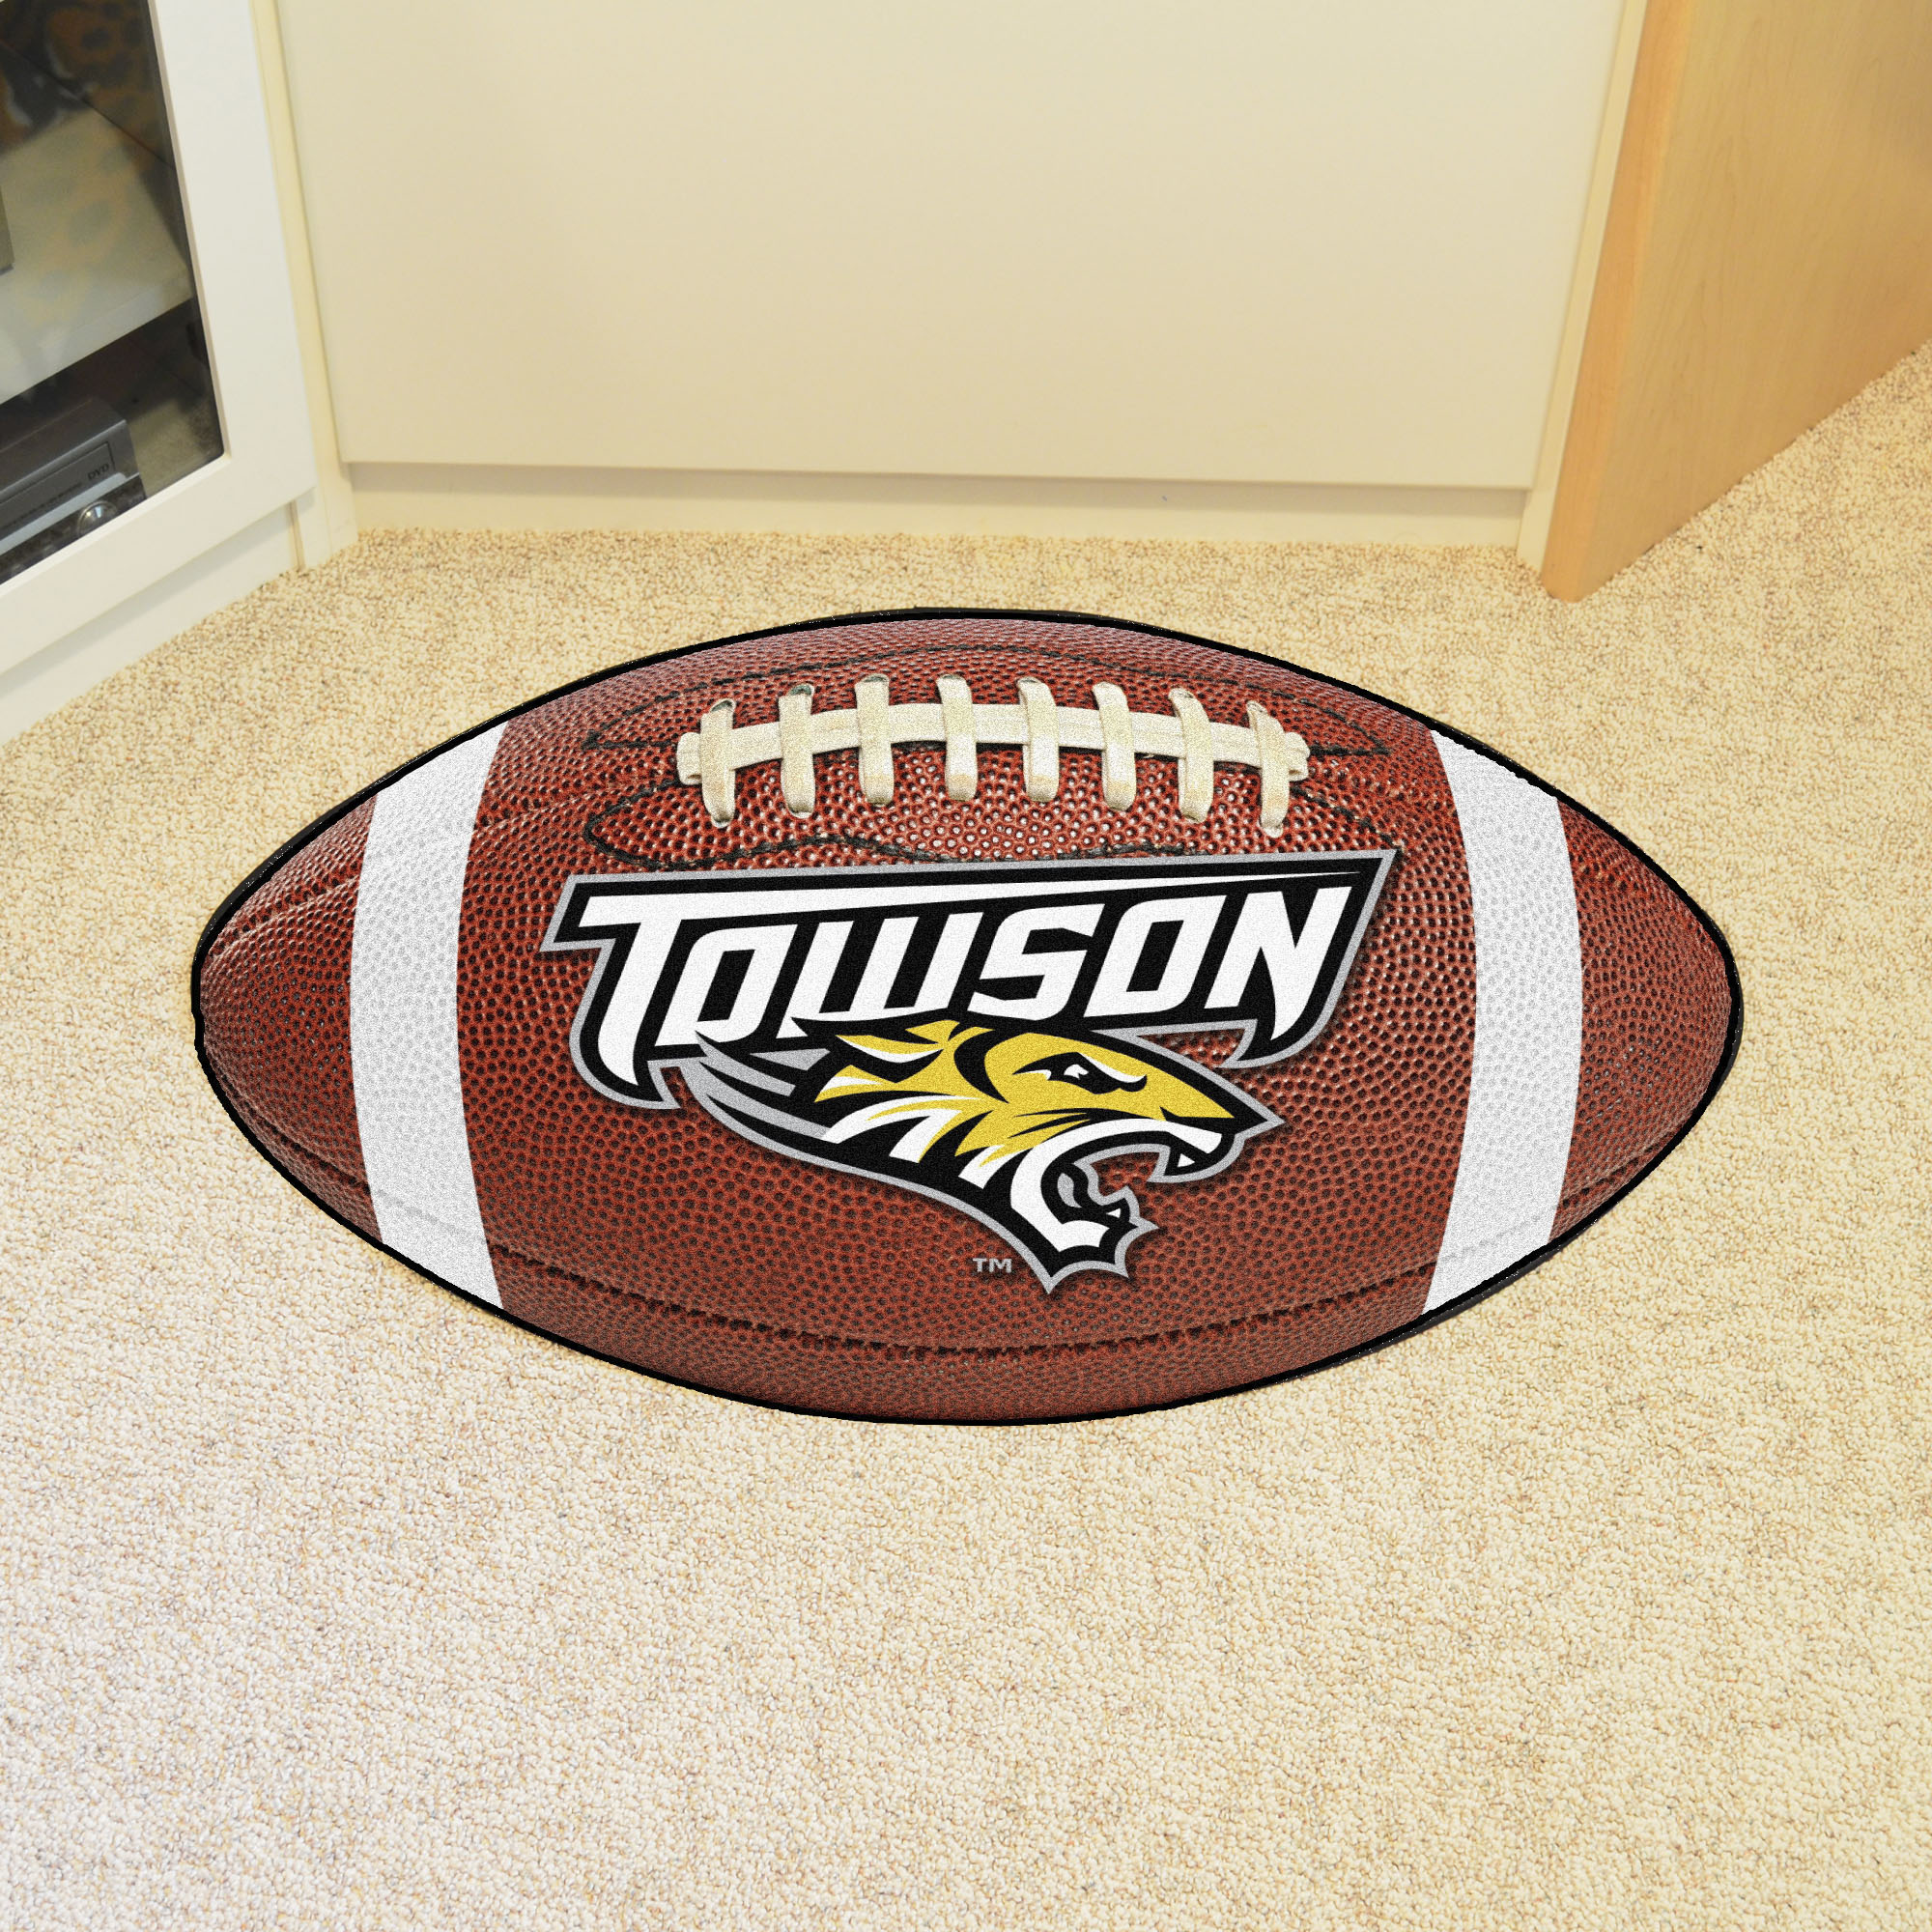 Towson University Ball Shaped Area Rugs (Ball Shaped Area Rugs: Logo & Name Football)